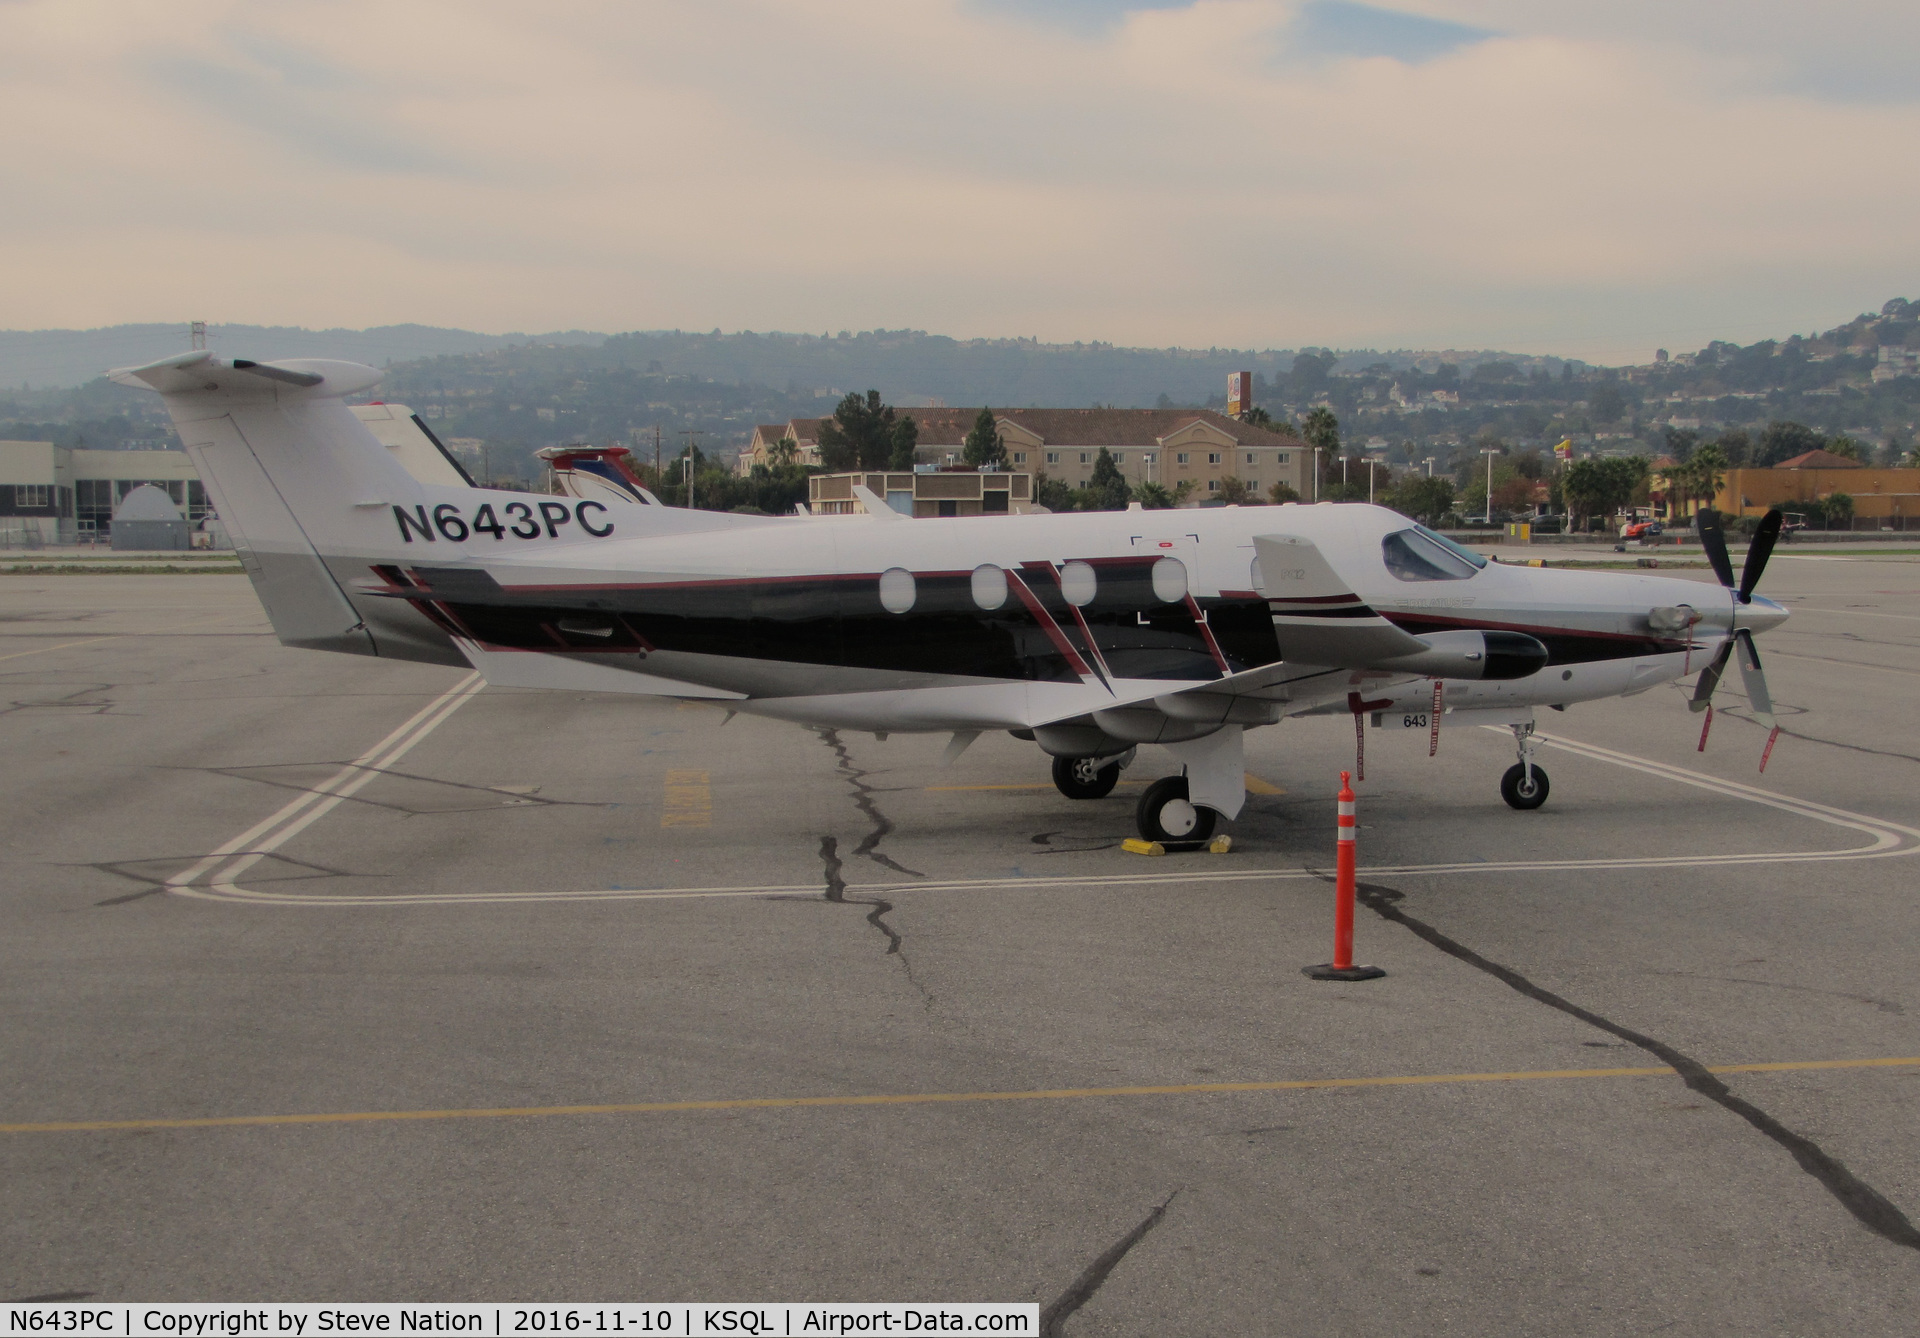 N643PC, 2005 Pilatus PC-12/45 C/N 643, RKI Pilatus LLC (Belmont, CA) 2005 Pilatus PC-12/45 @ San Carlos Airport, CA home base